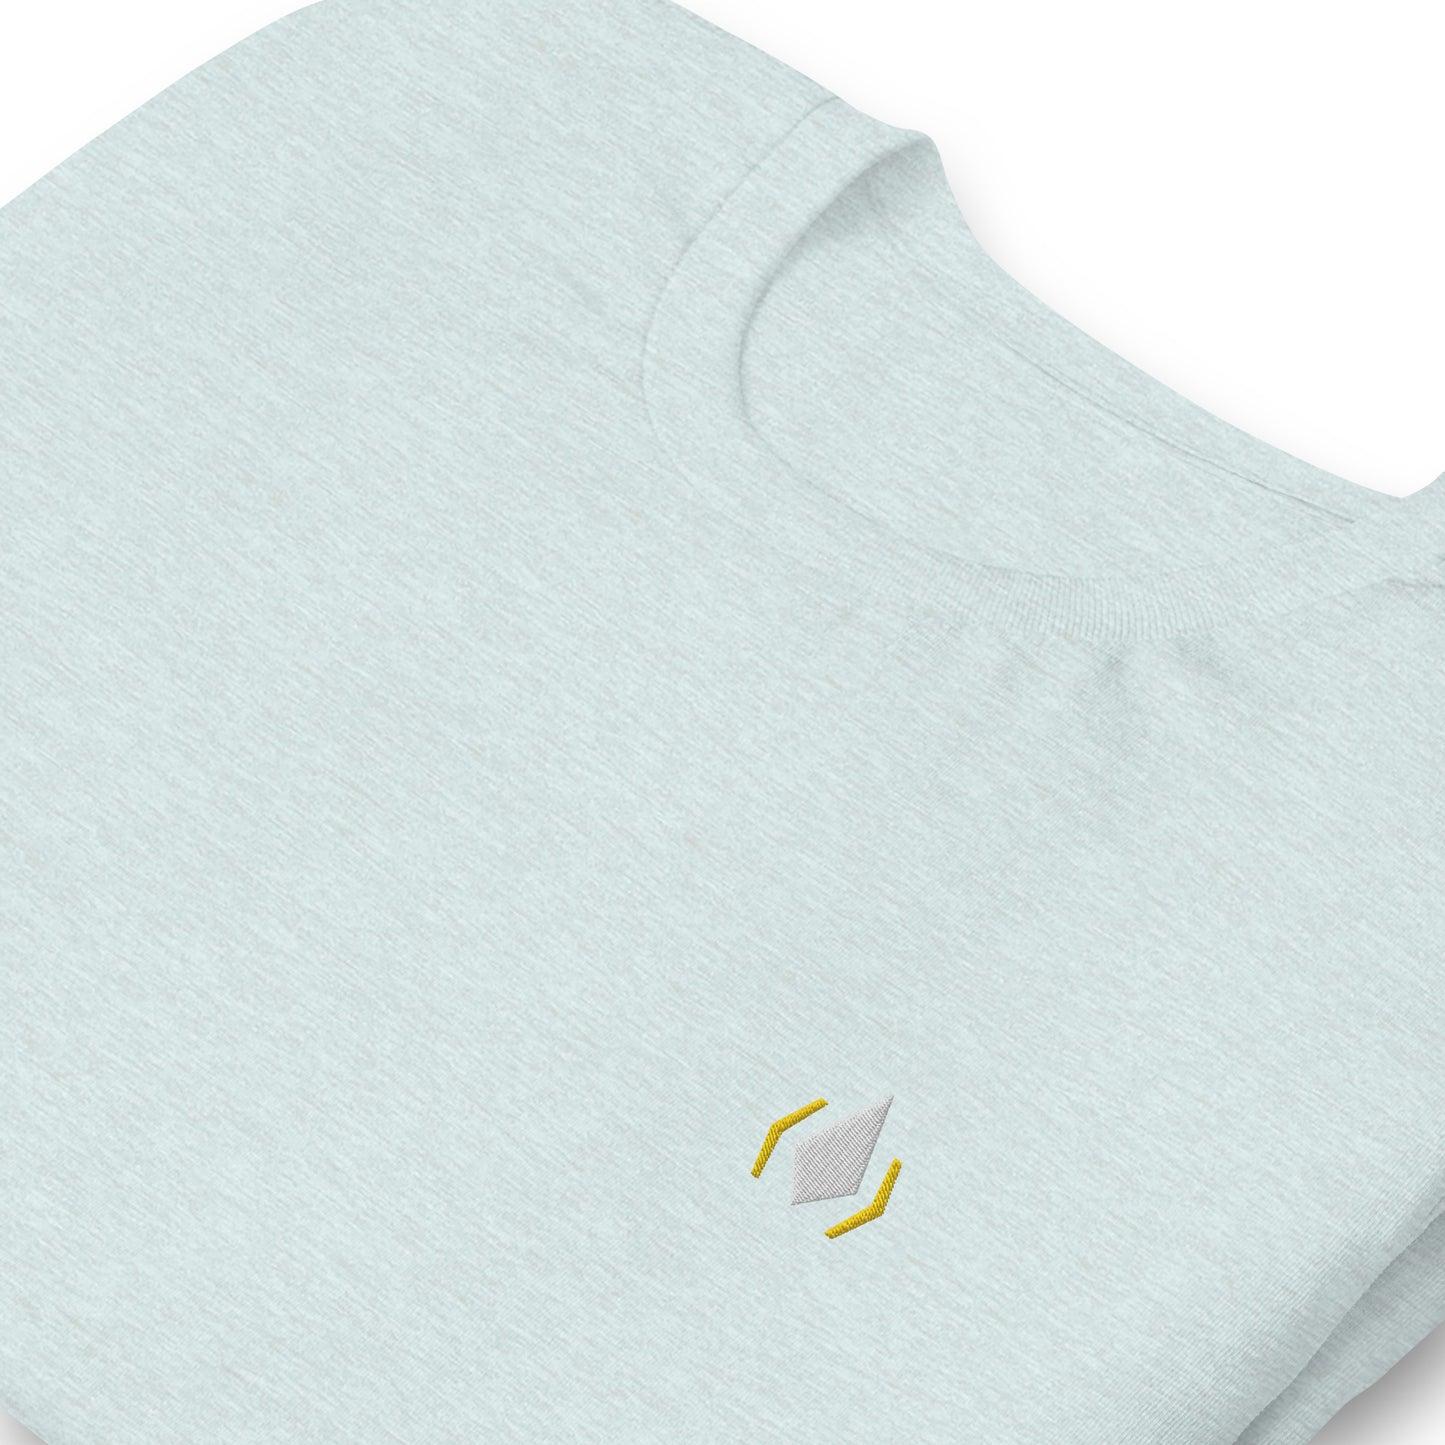 Ravelian Not Cube, Embroidered - Sigil Attire - Unisex T-shirt